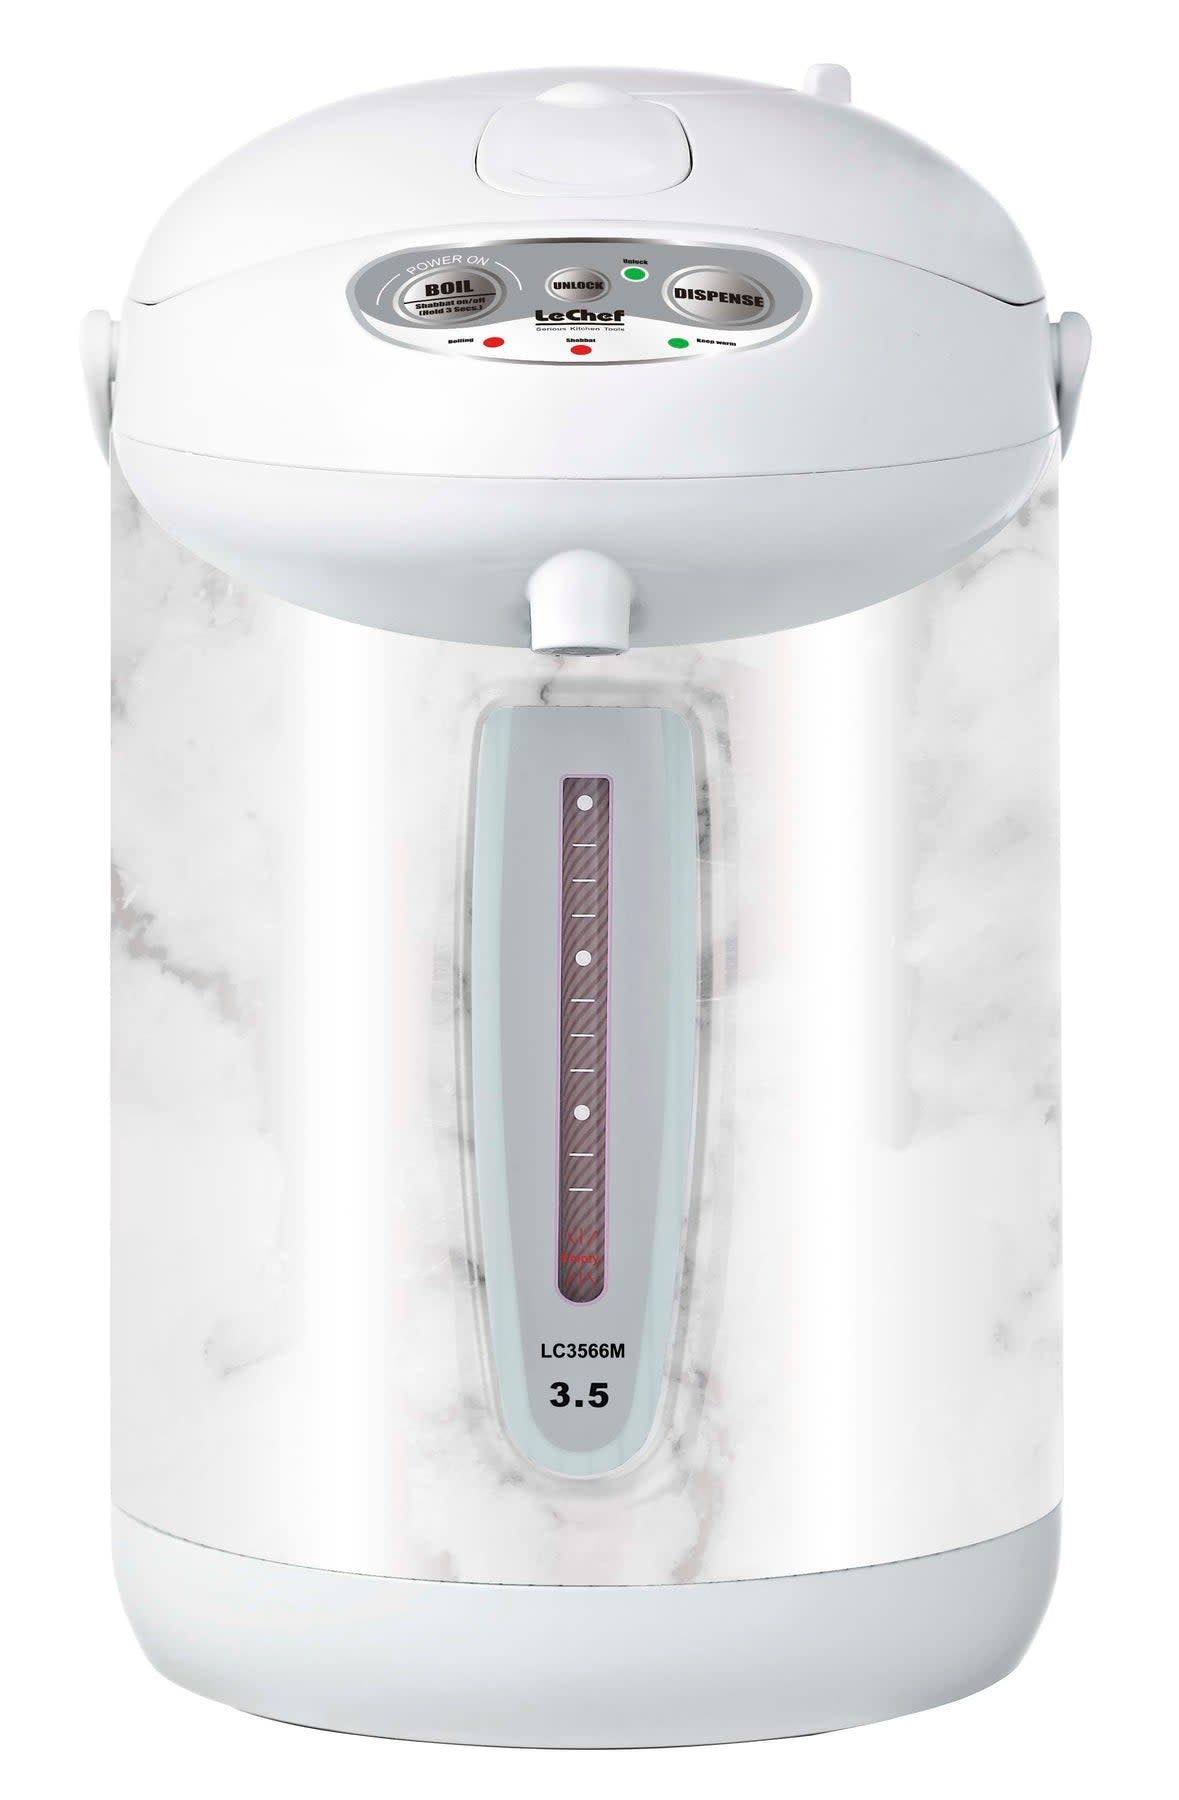  Le'chef Electric Hot Water Pot 5.4 QT